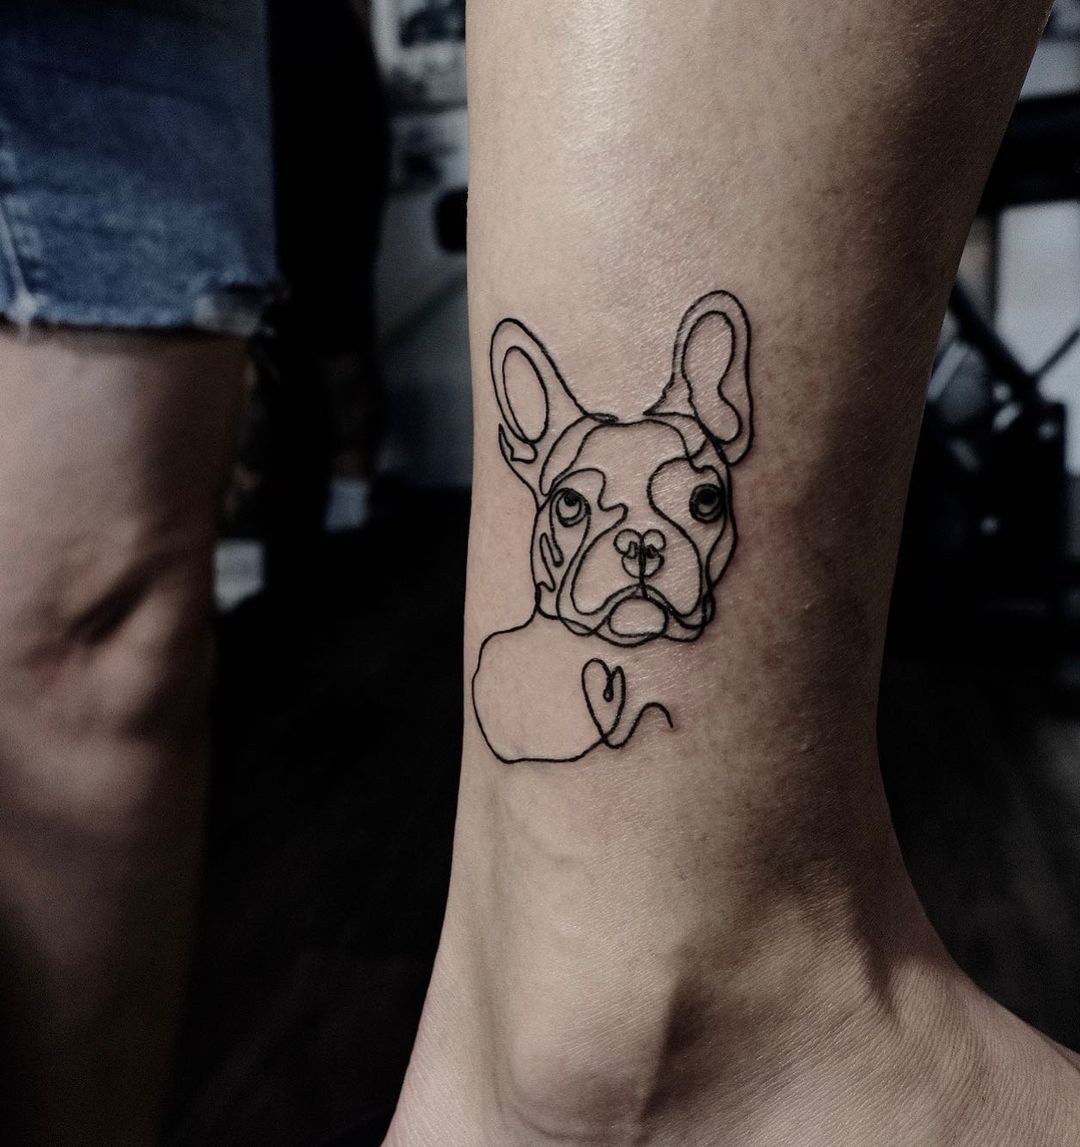 45 Dog Tattoos